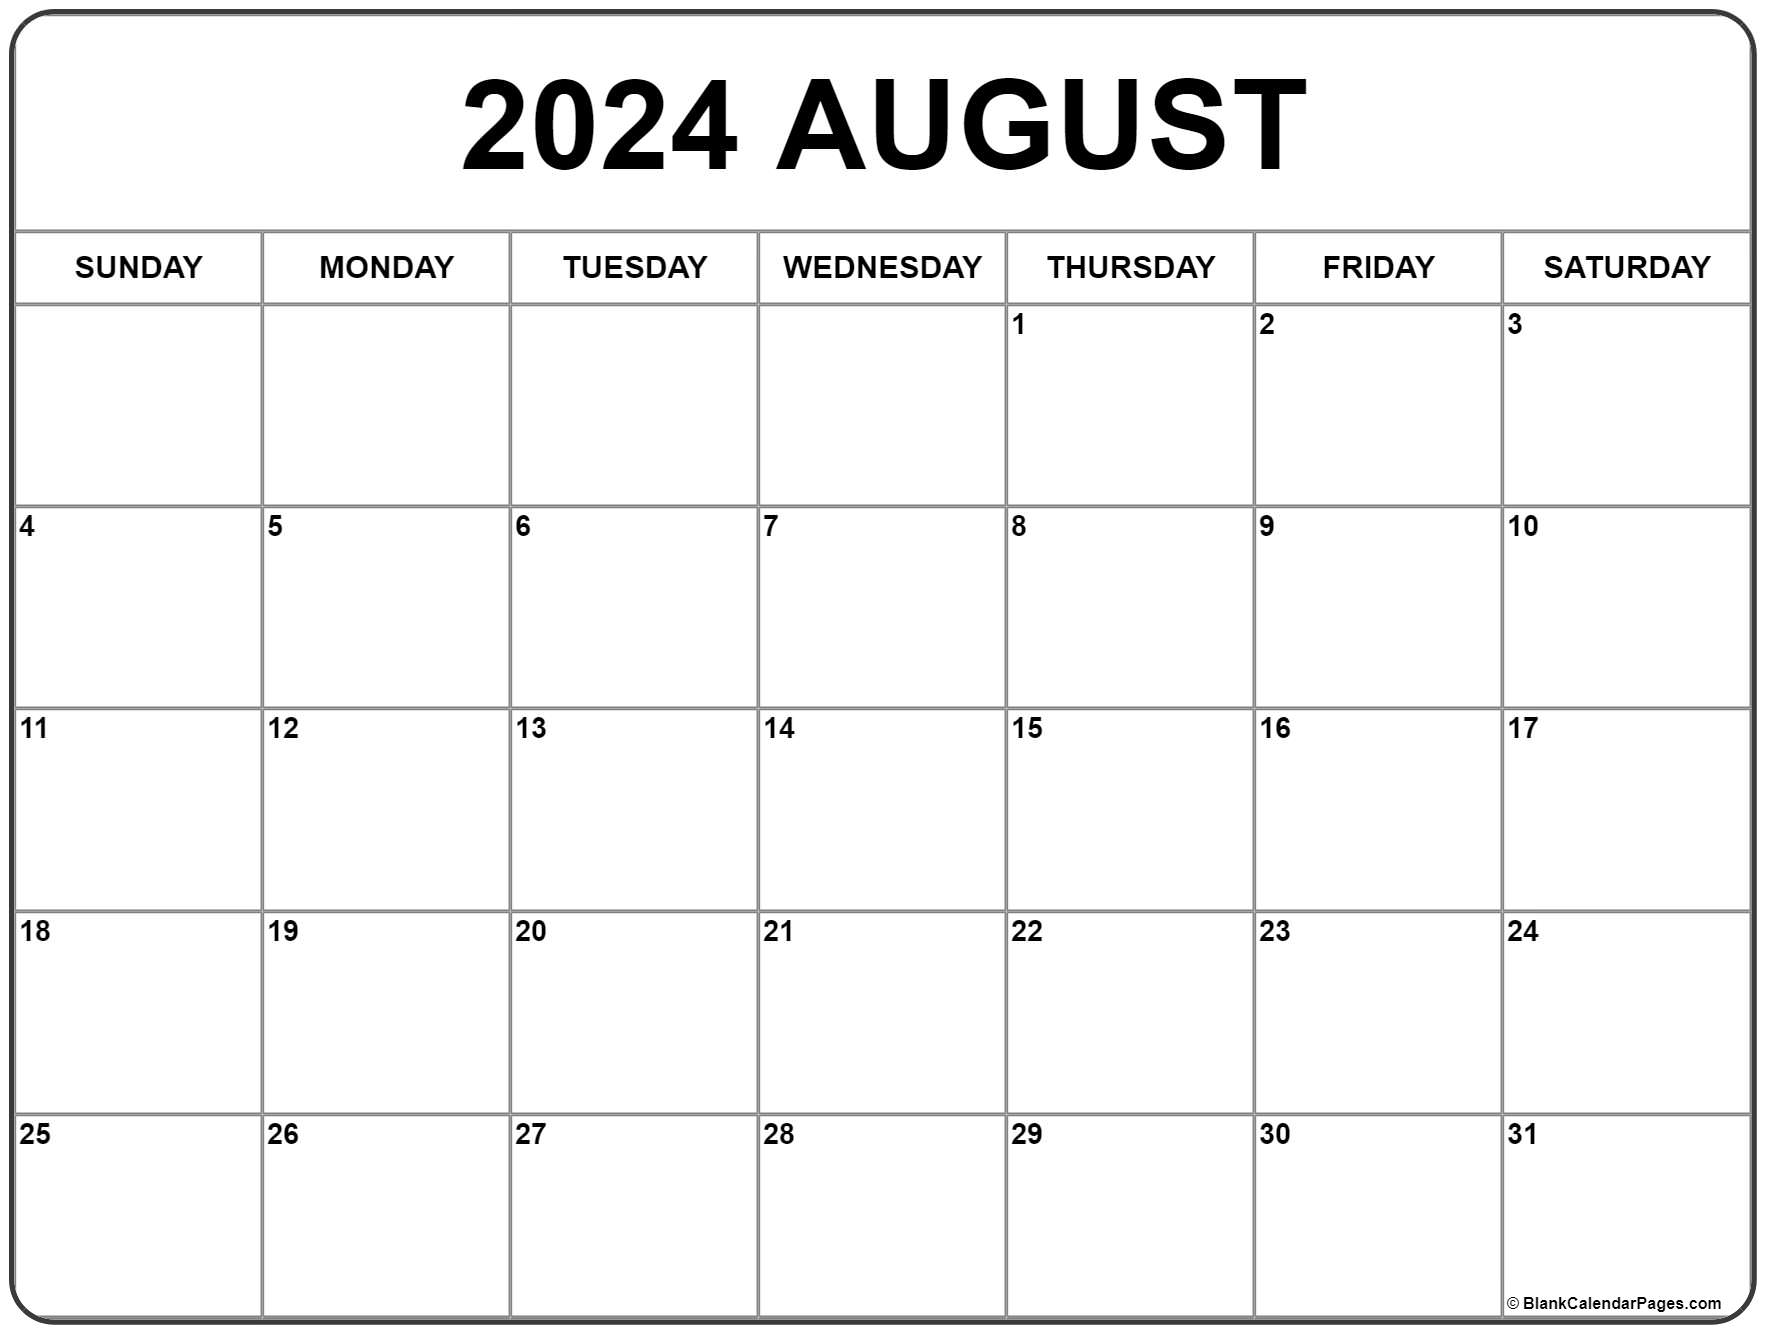 August 24 calendar  free printable calendar templates With Regard To Blank Calender Template